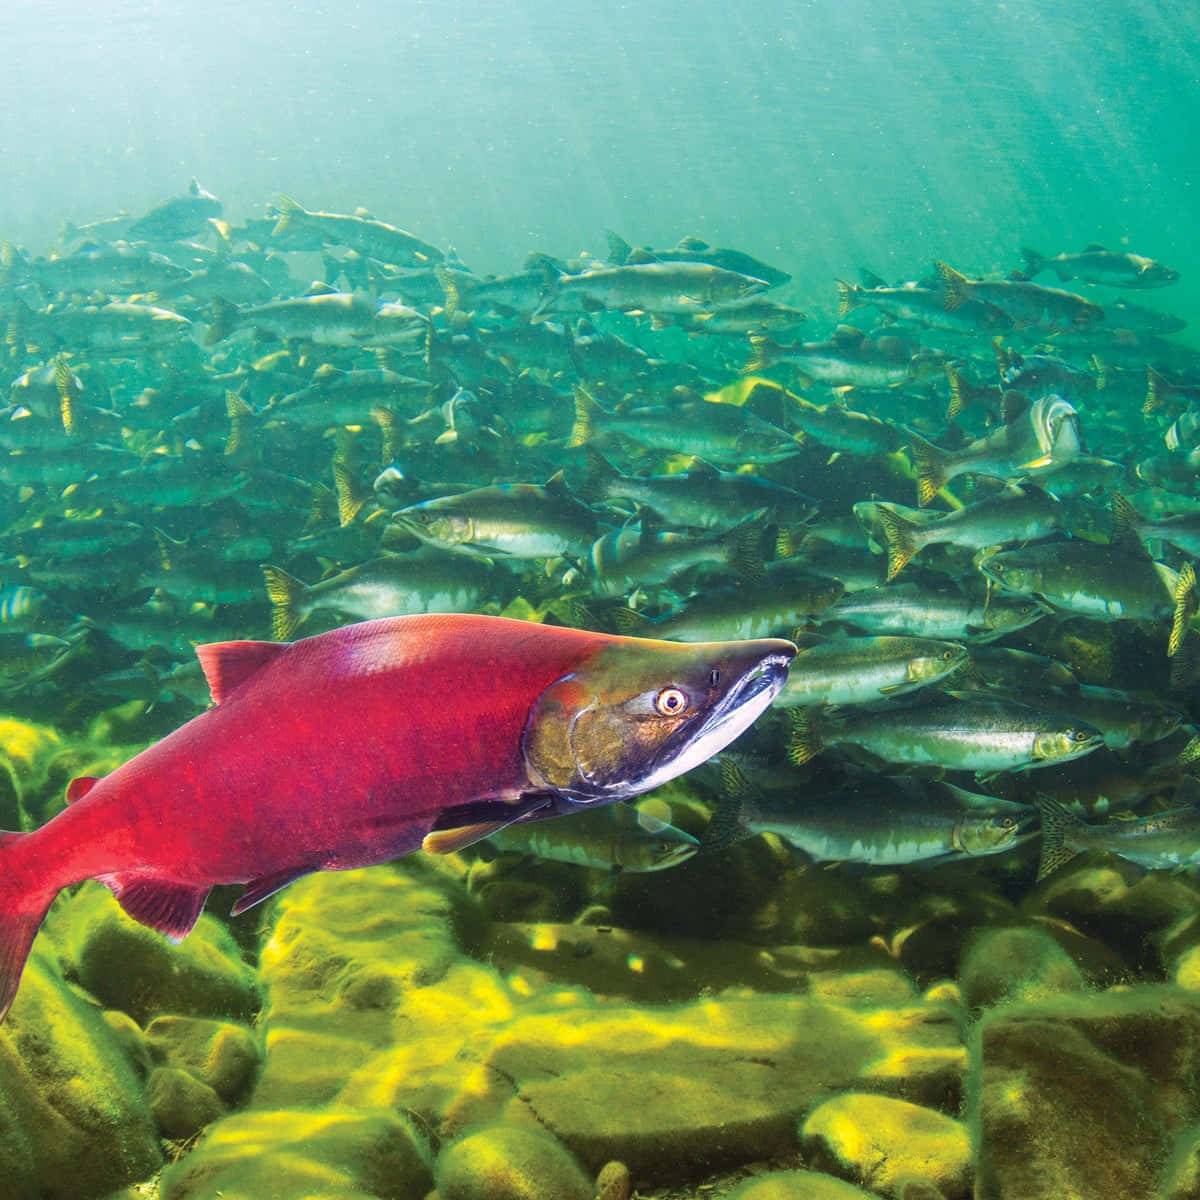 Red Pacific Salmon Leading School Underwater.jpg Wallpaper